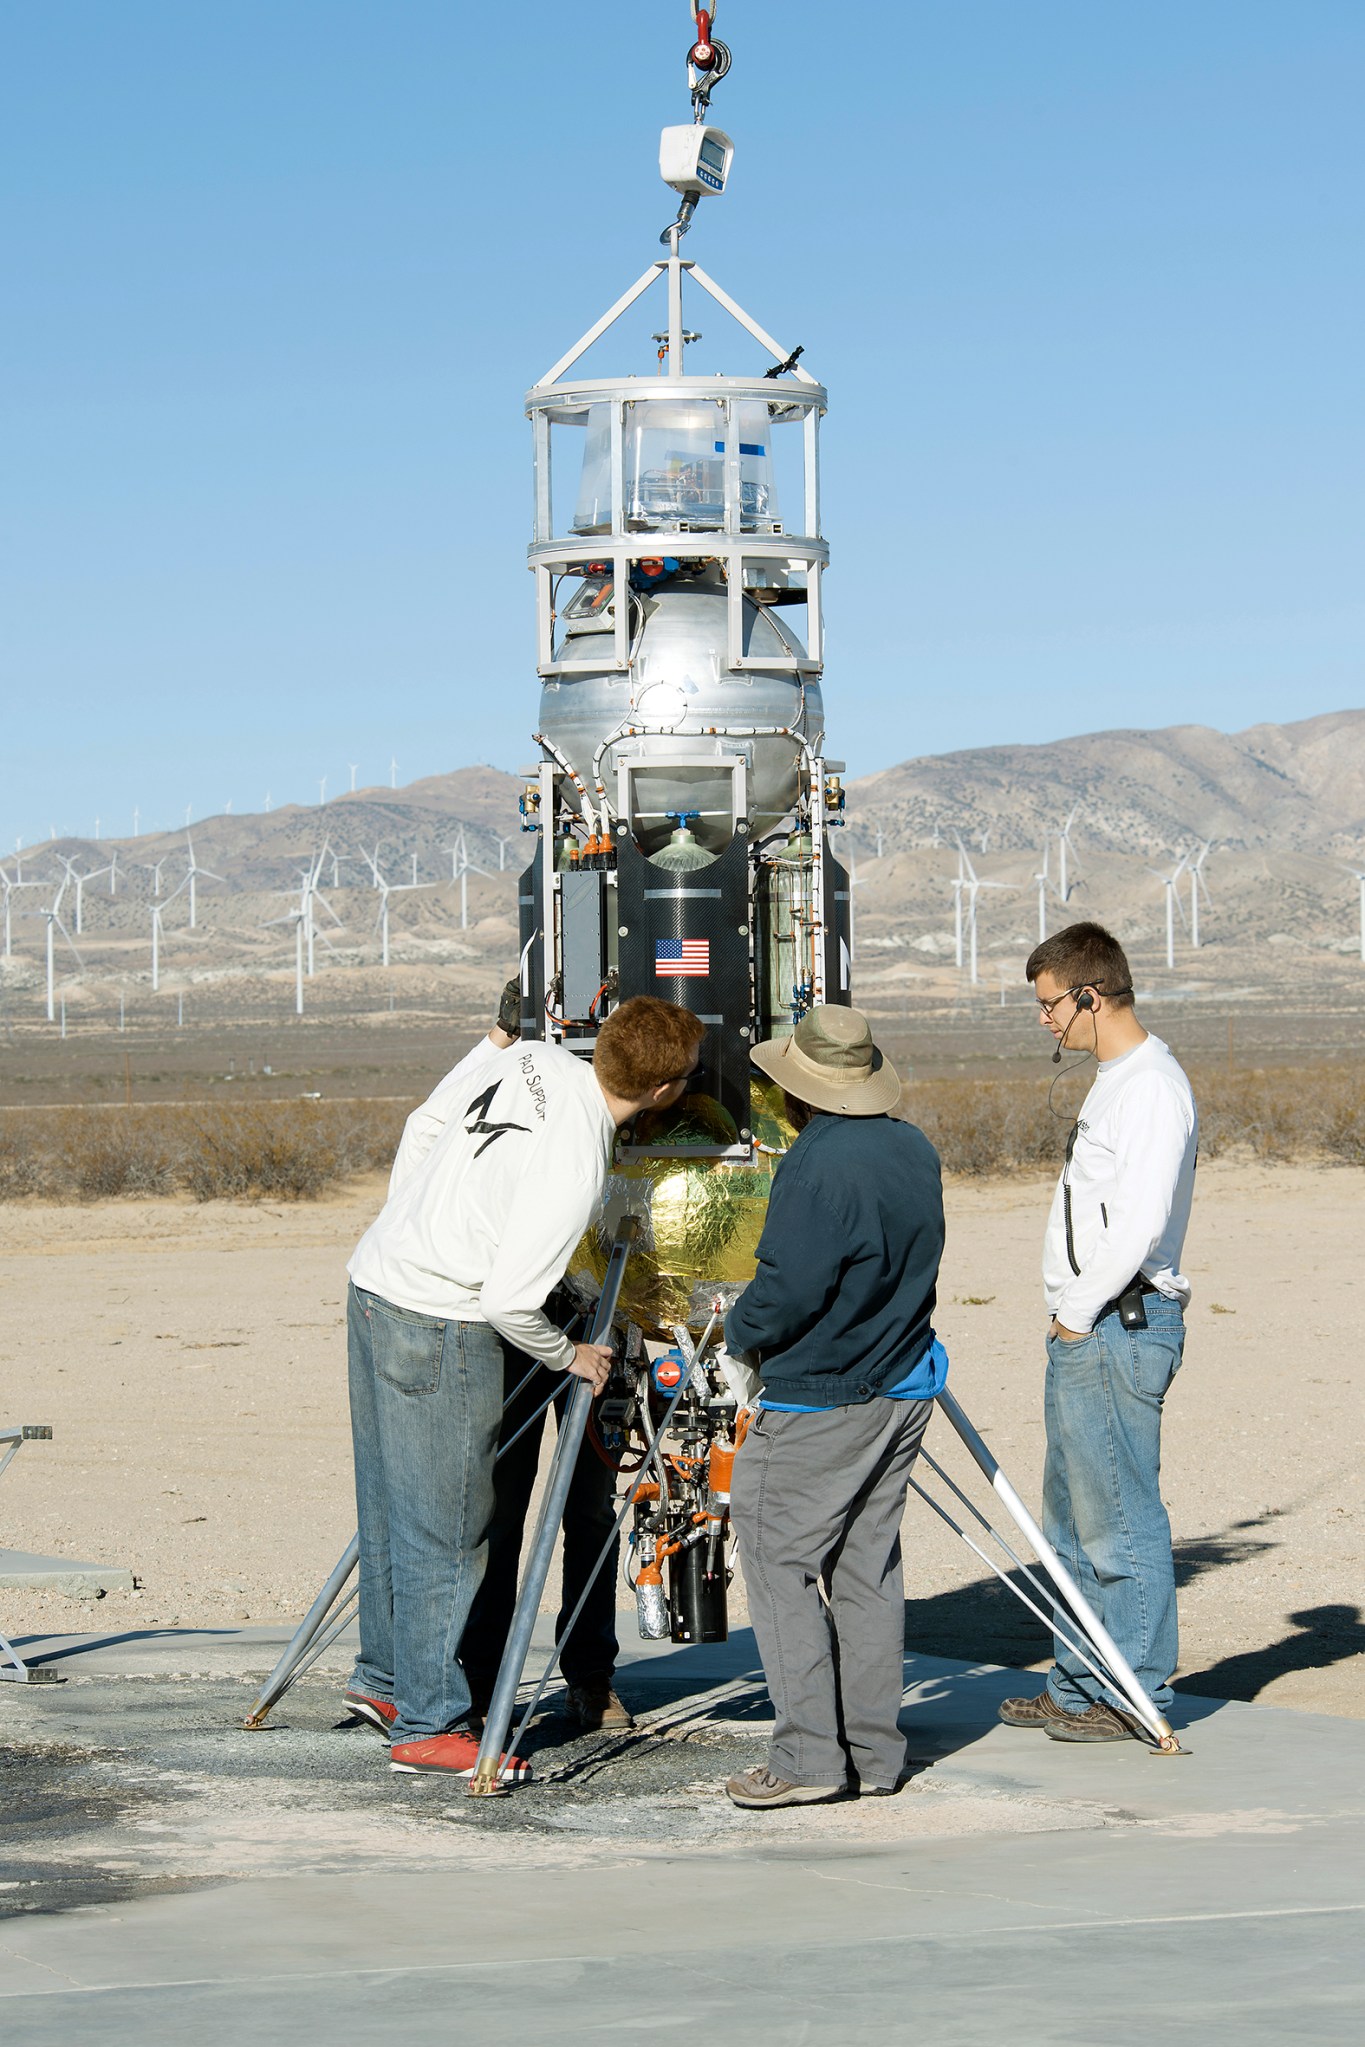 Masten employees repare Xodiac rocket to flight test JHU APL technology.